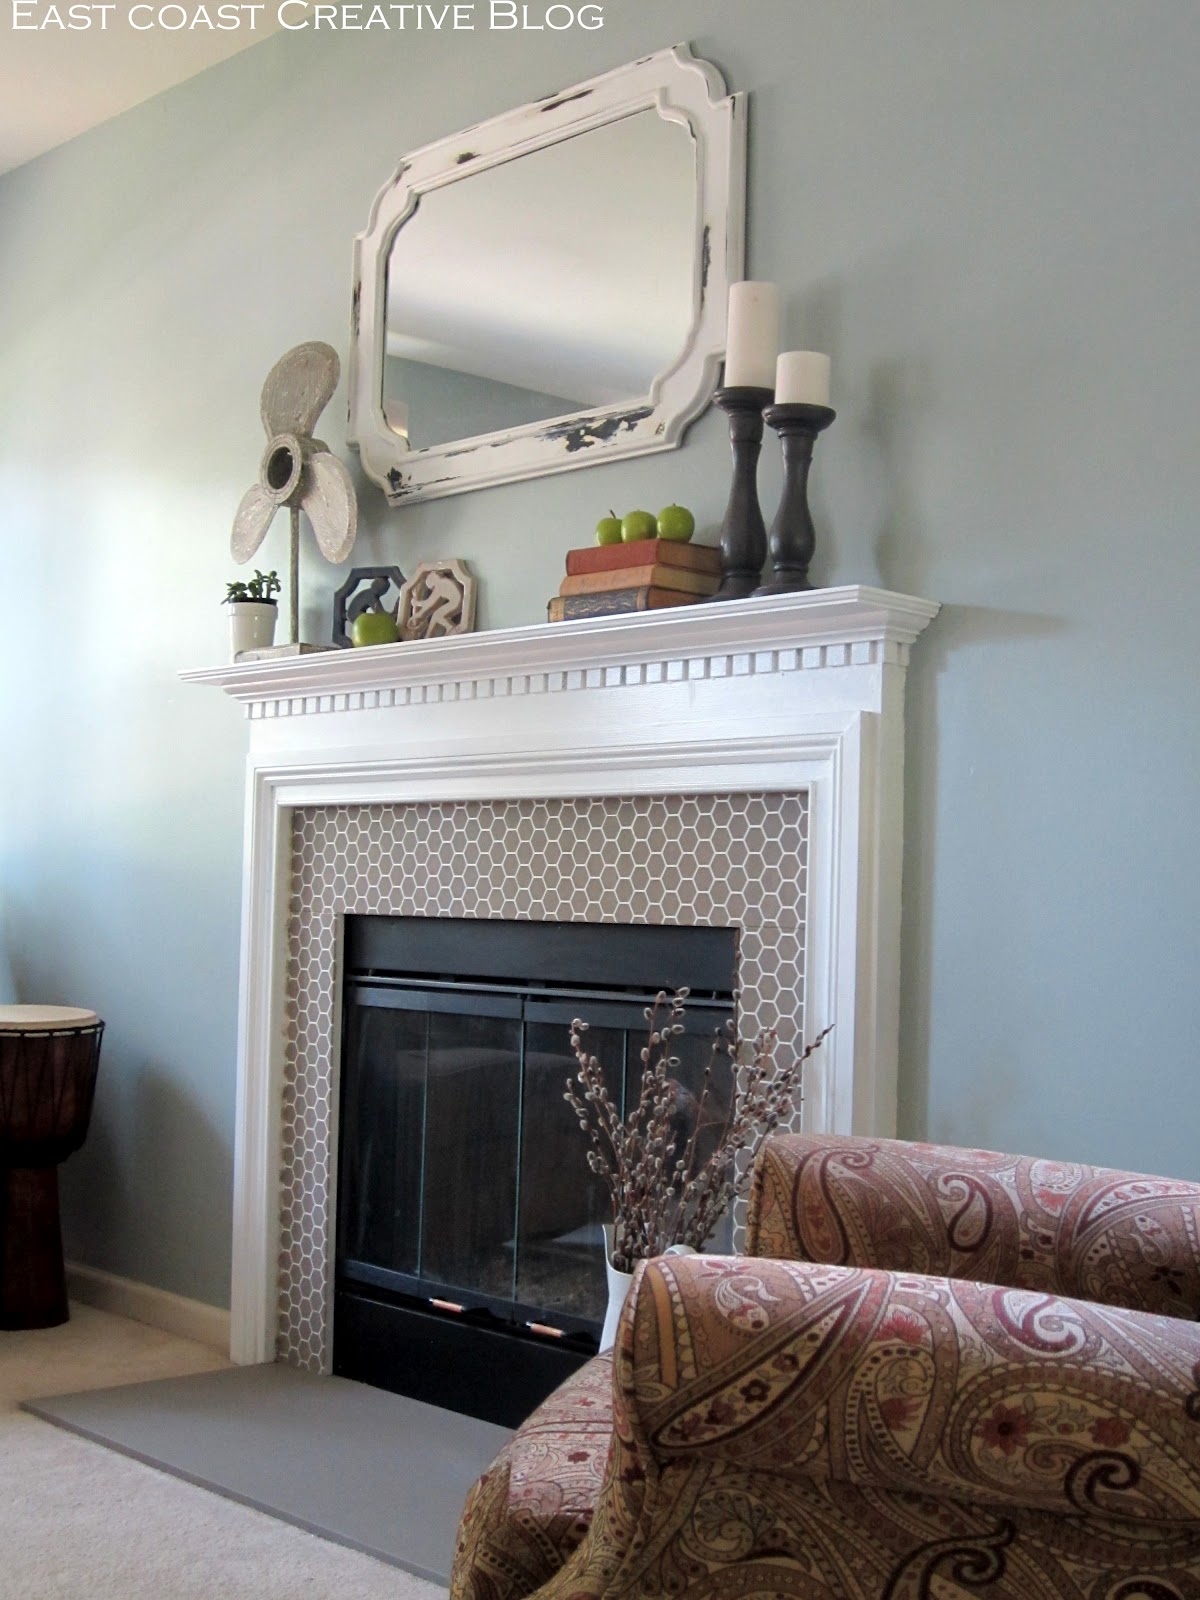 East Coast Fireplace Fresh Stenciled Faux Tile Fireplace Tutorial Showit Blog